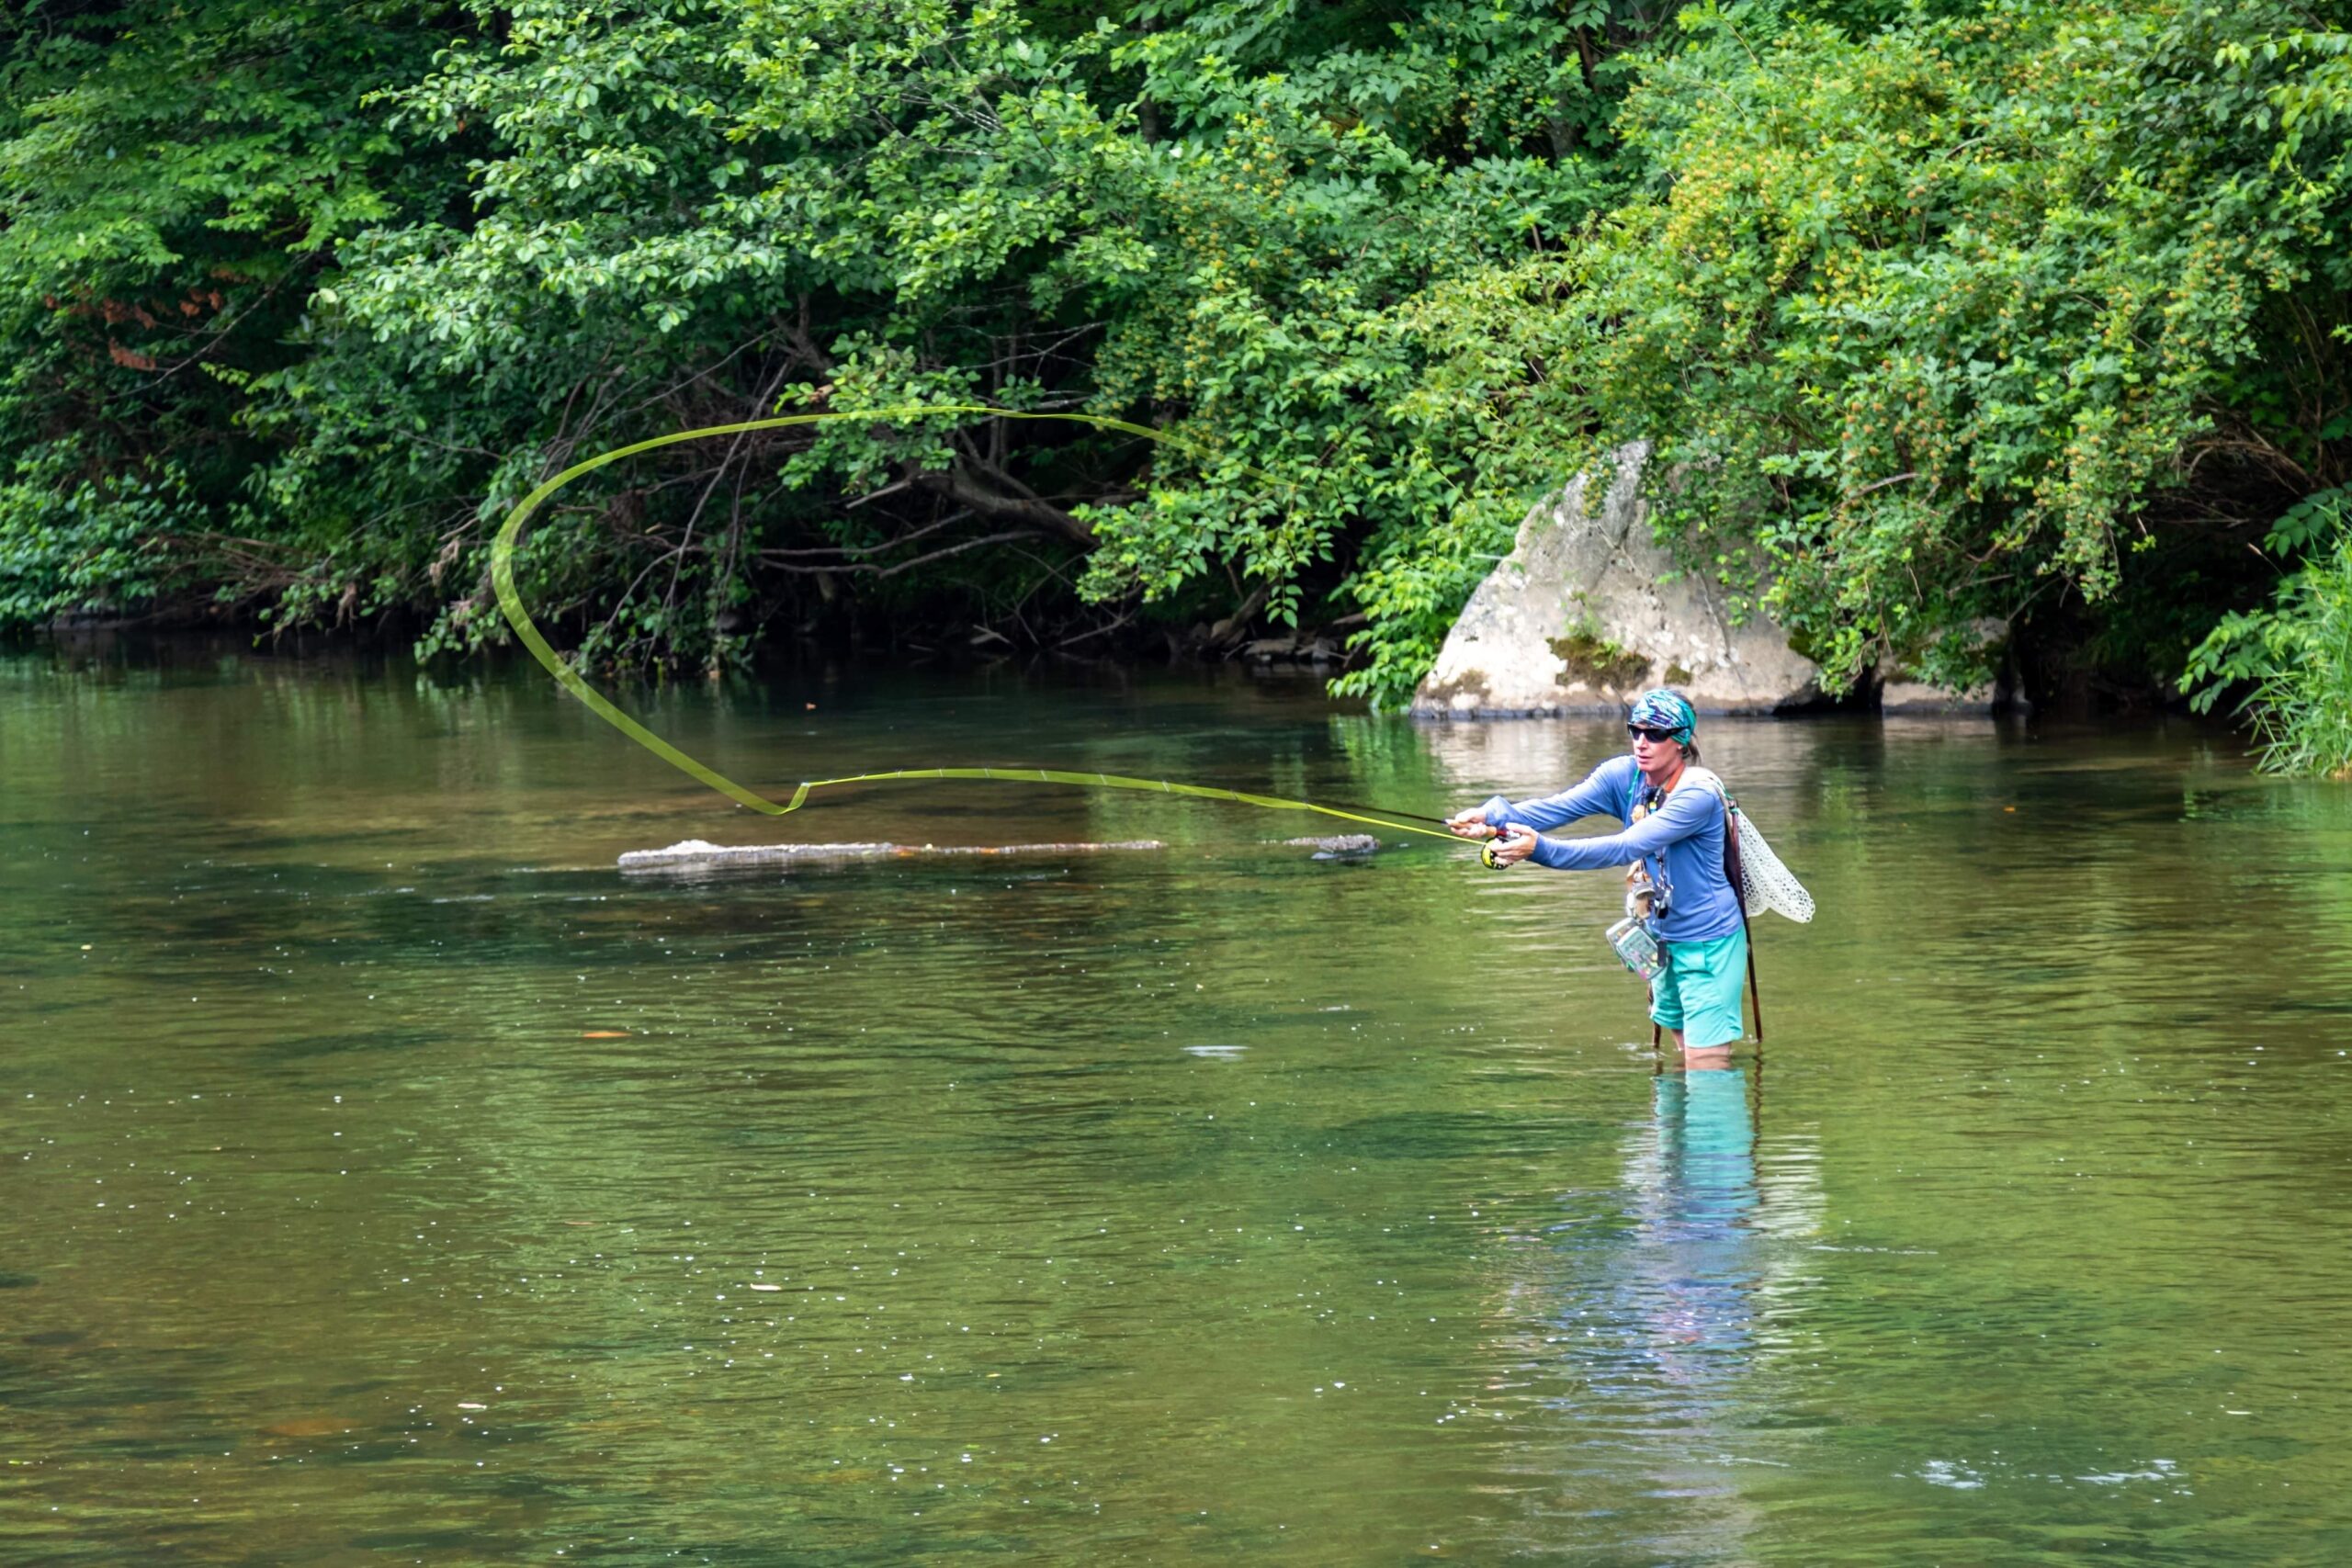 Owner of RiverGirl Fishing Company, Kelly McCoy fly fishing. (Photo Credit: ©Germain Media)